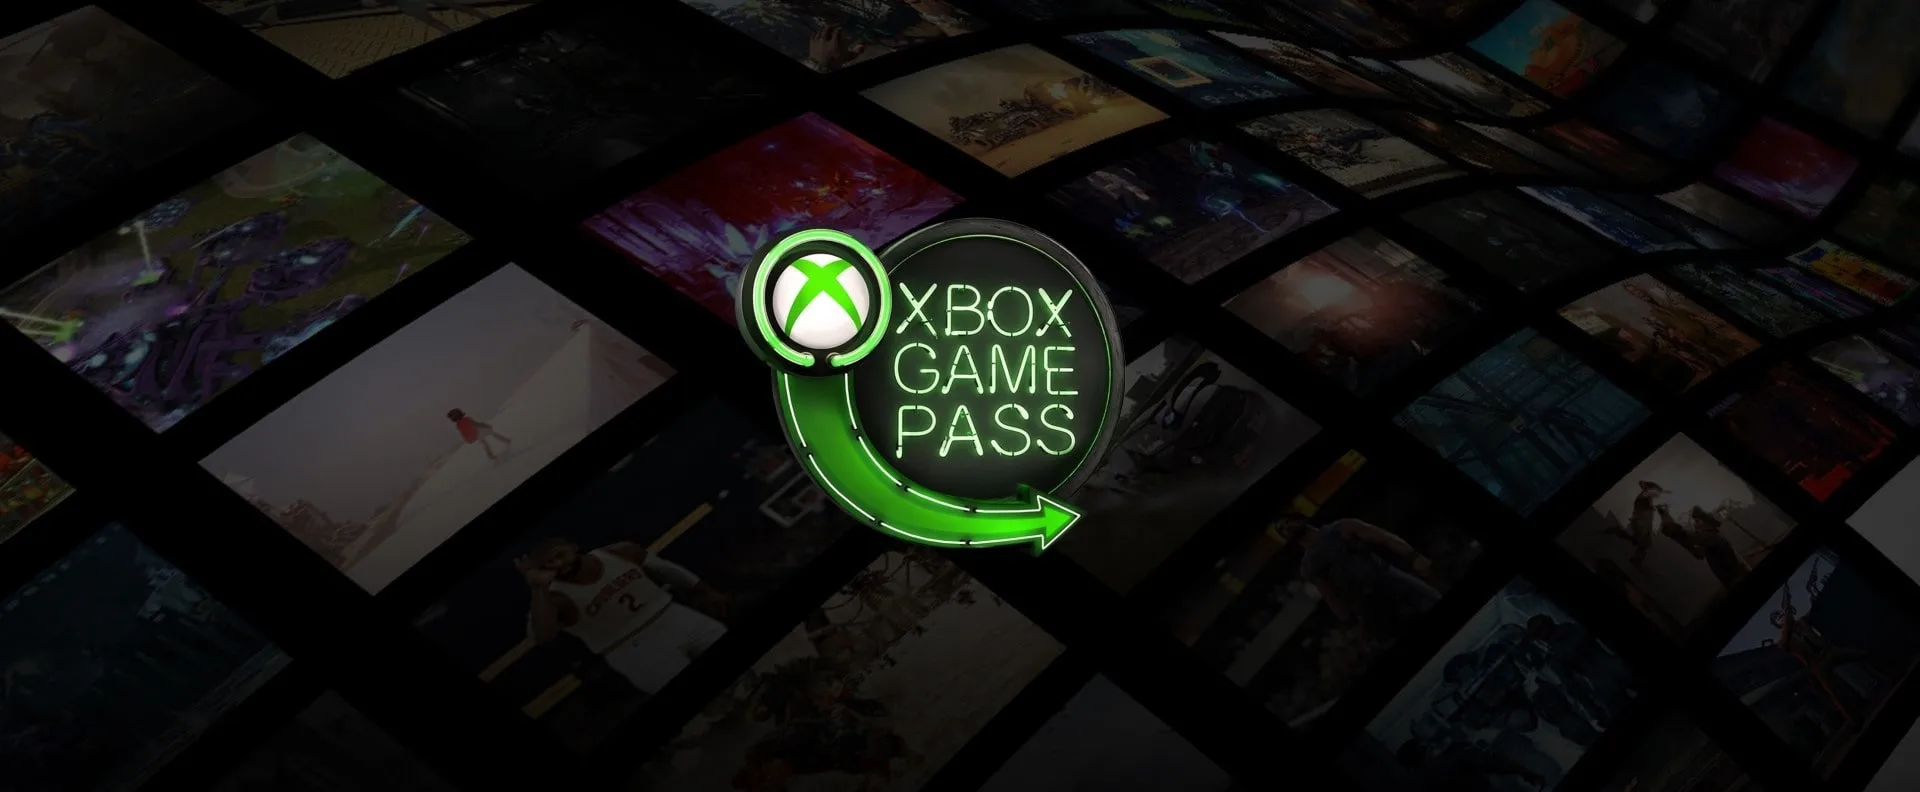 خدمة Xbox Game Pass تتخطى 15 مليون مشترك